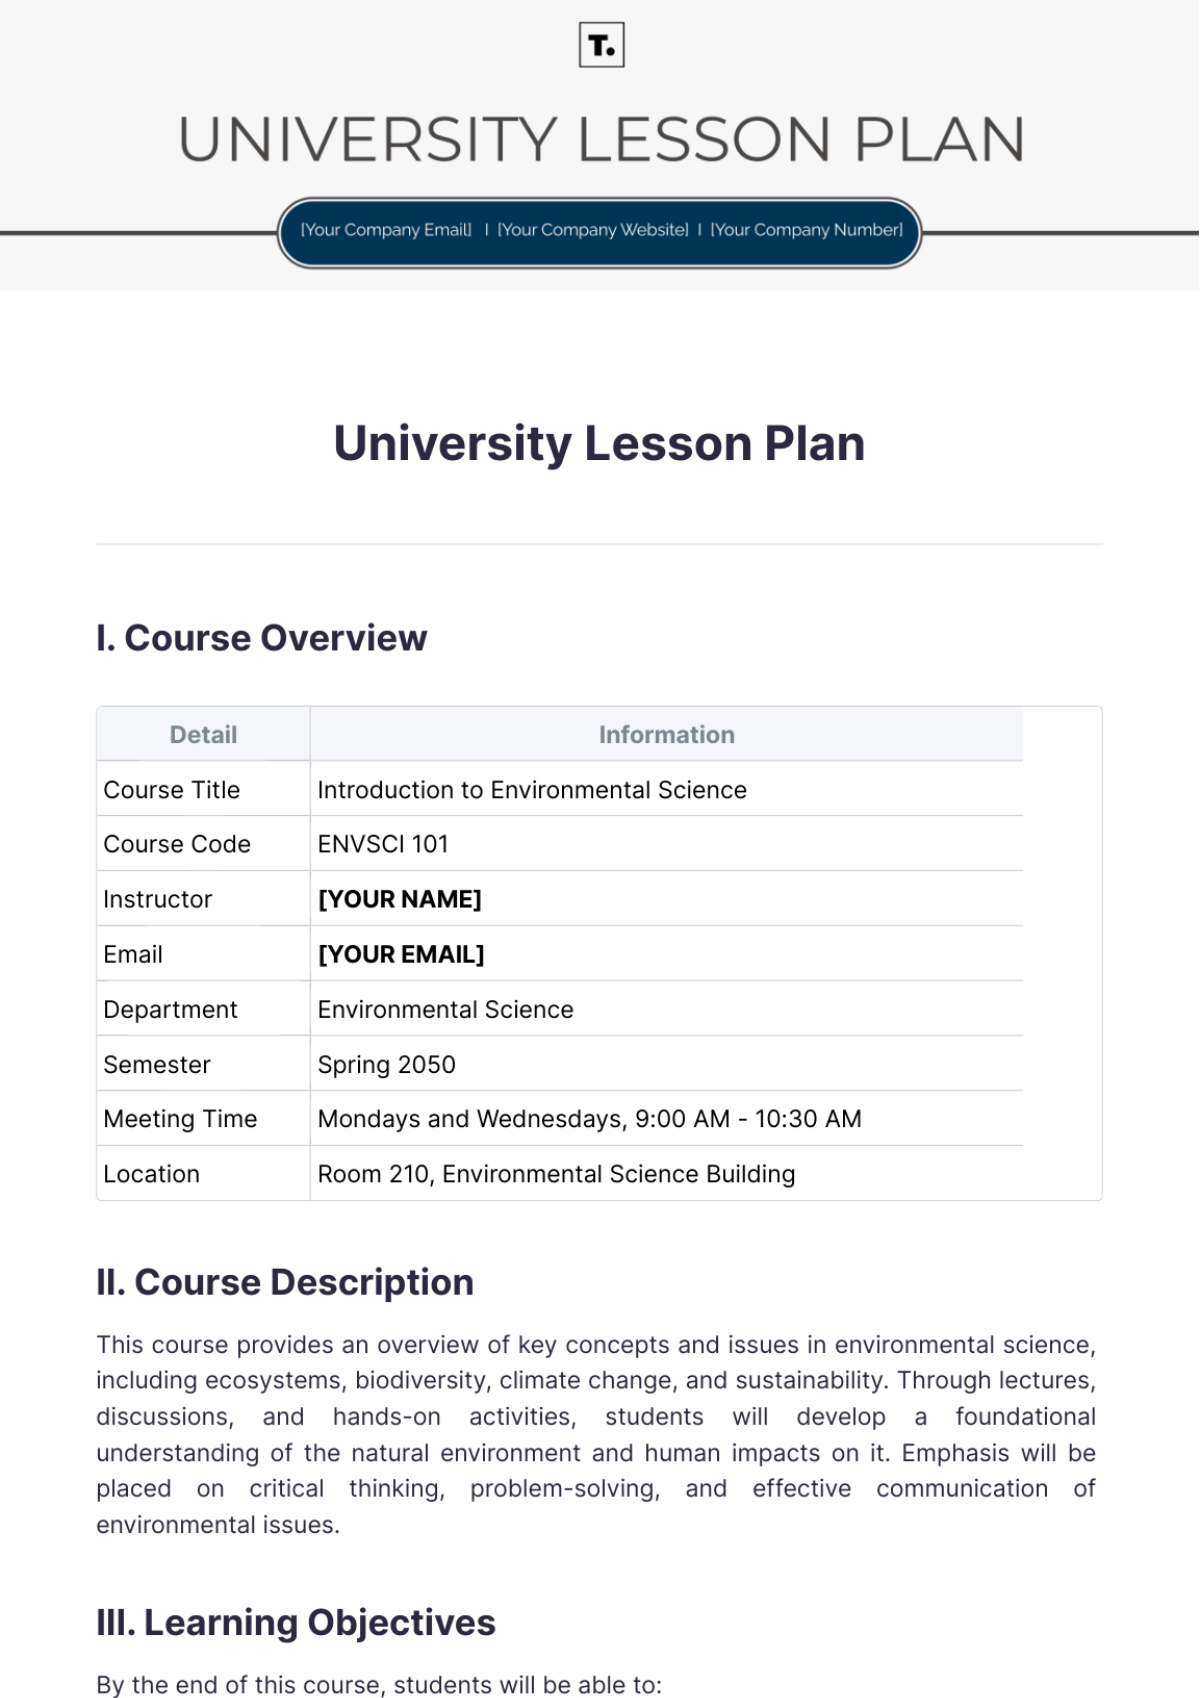 University Lesson Plan Template